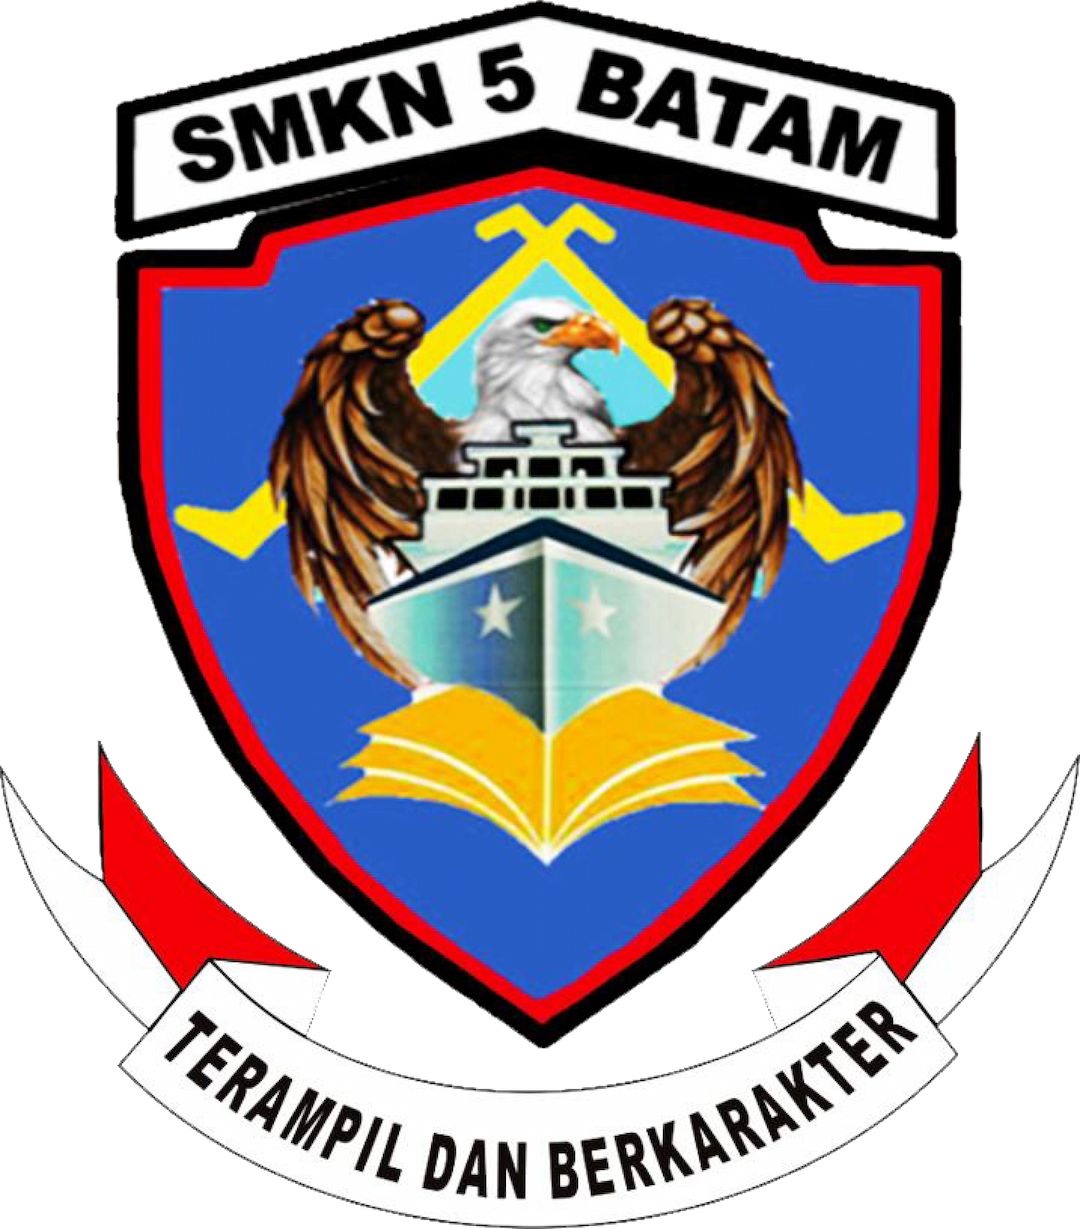 SMK NEGERI 5 BATAM